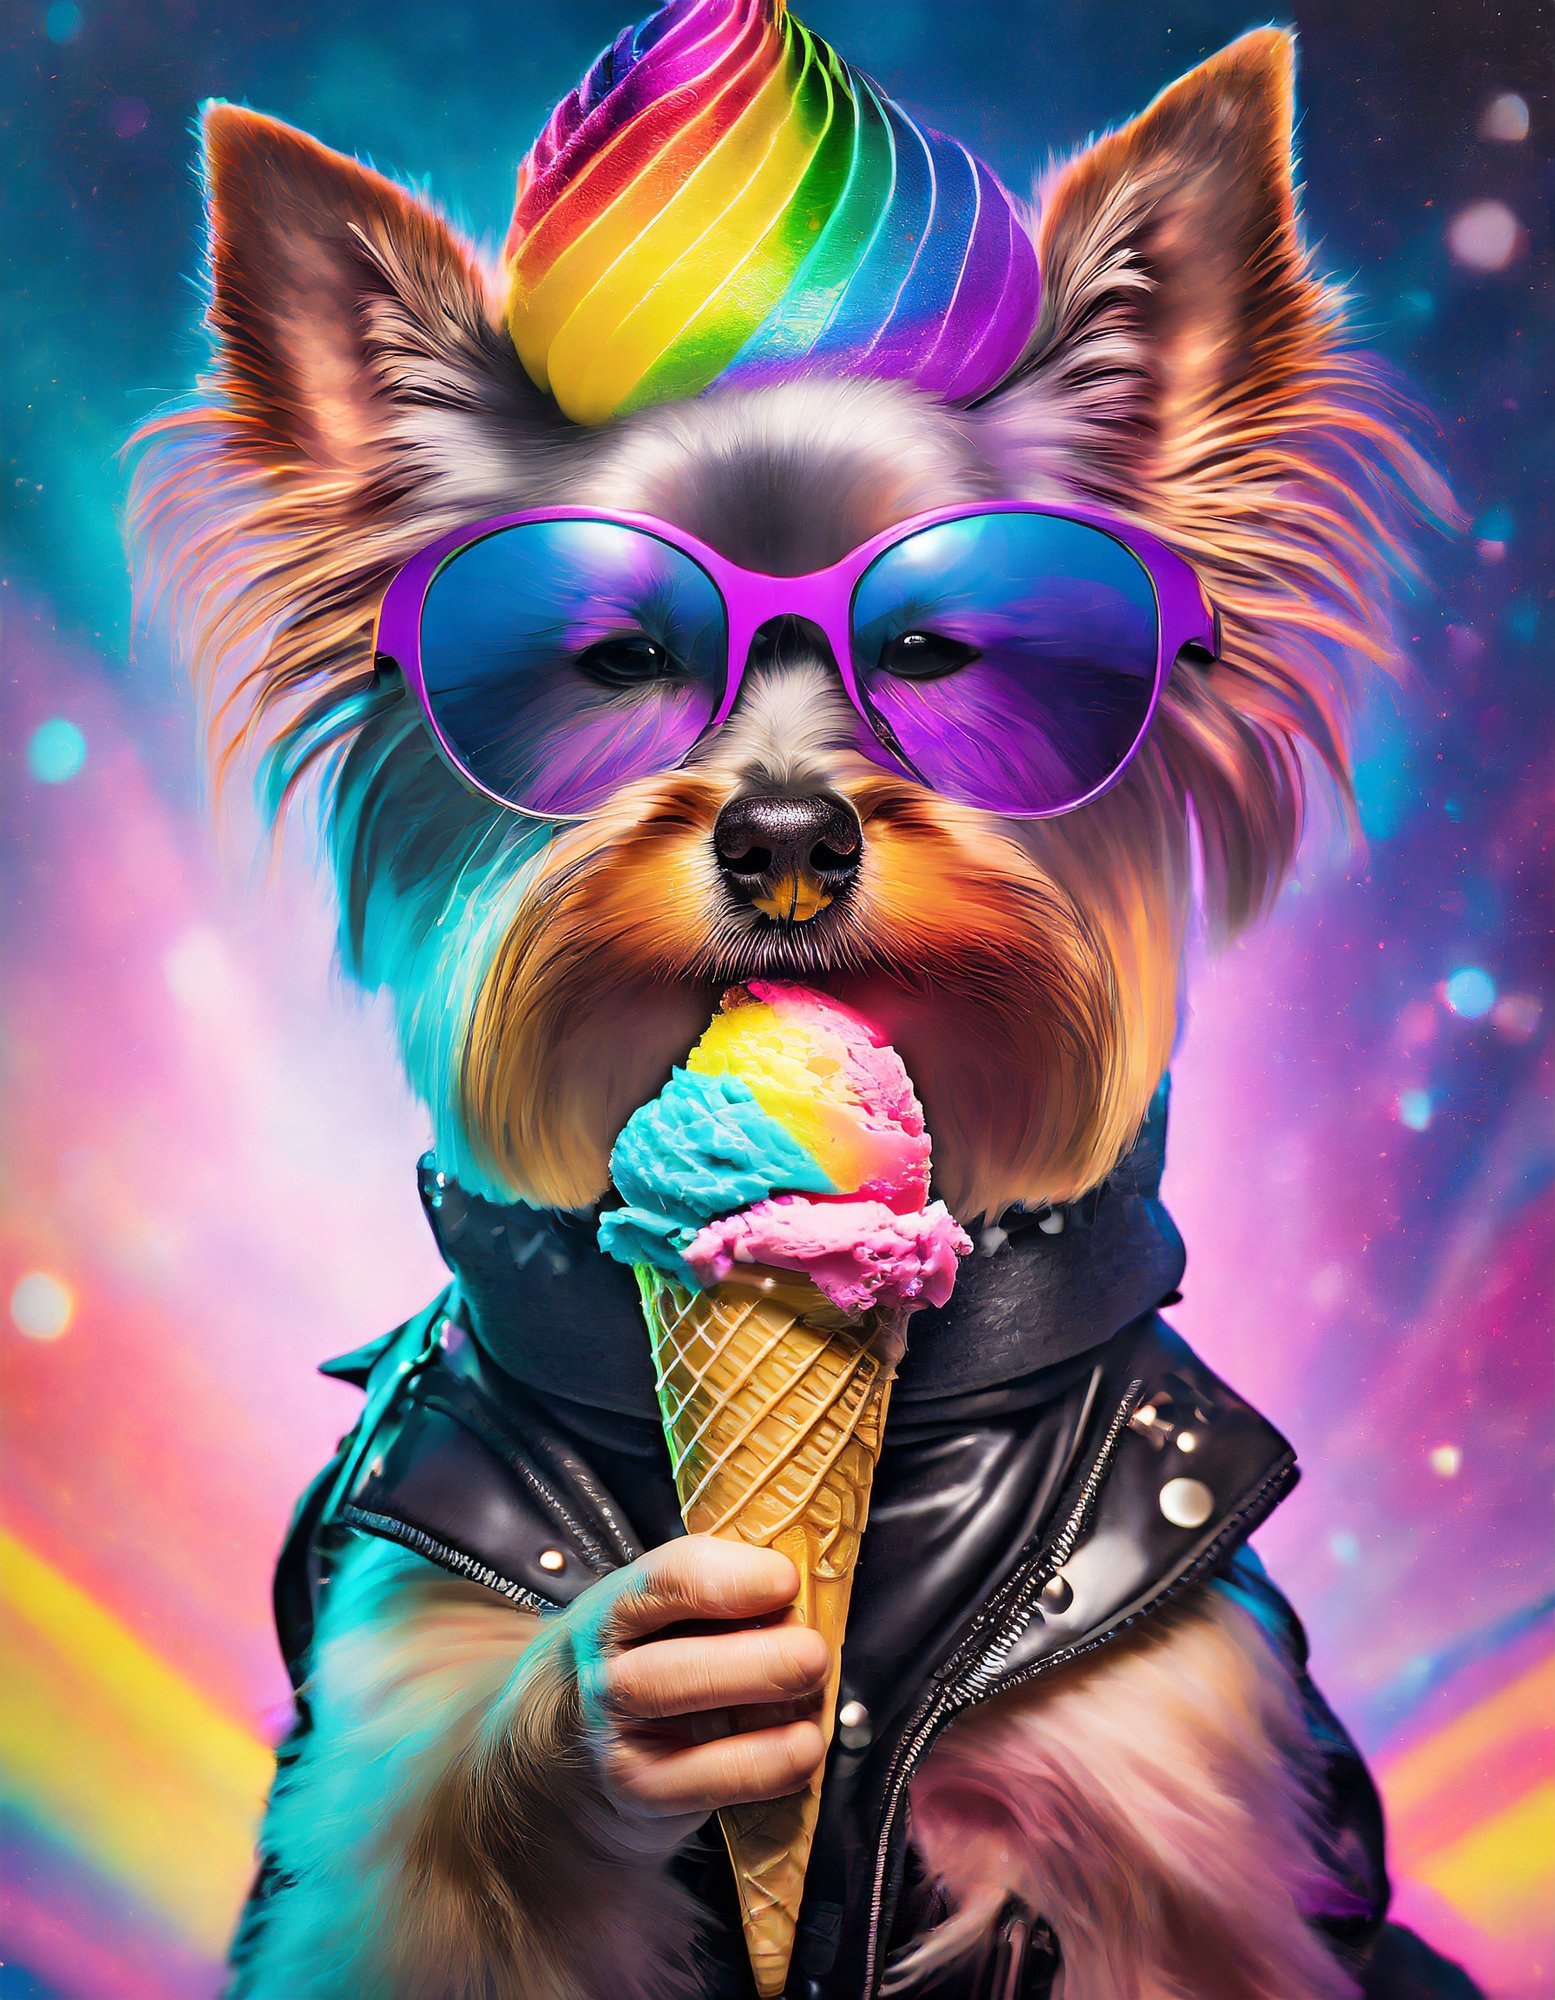 Firefly Punk rock yorki having a rainbow ice cream cone 1990